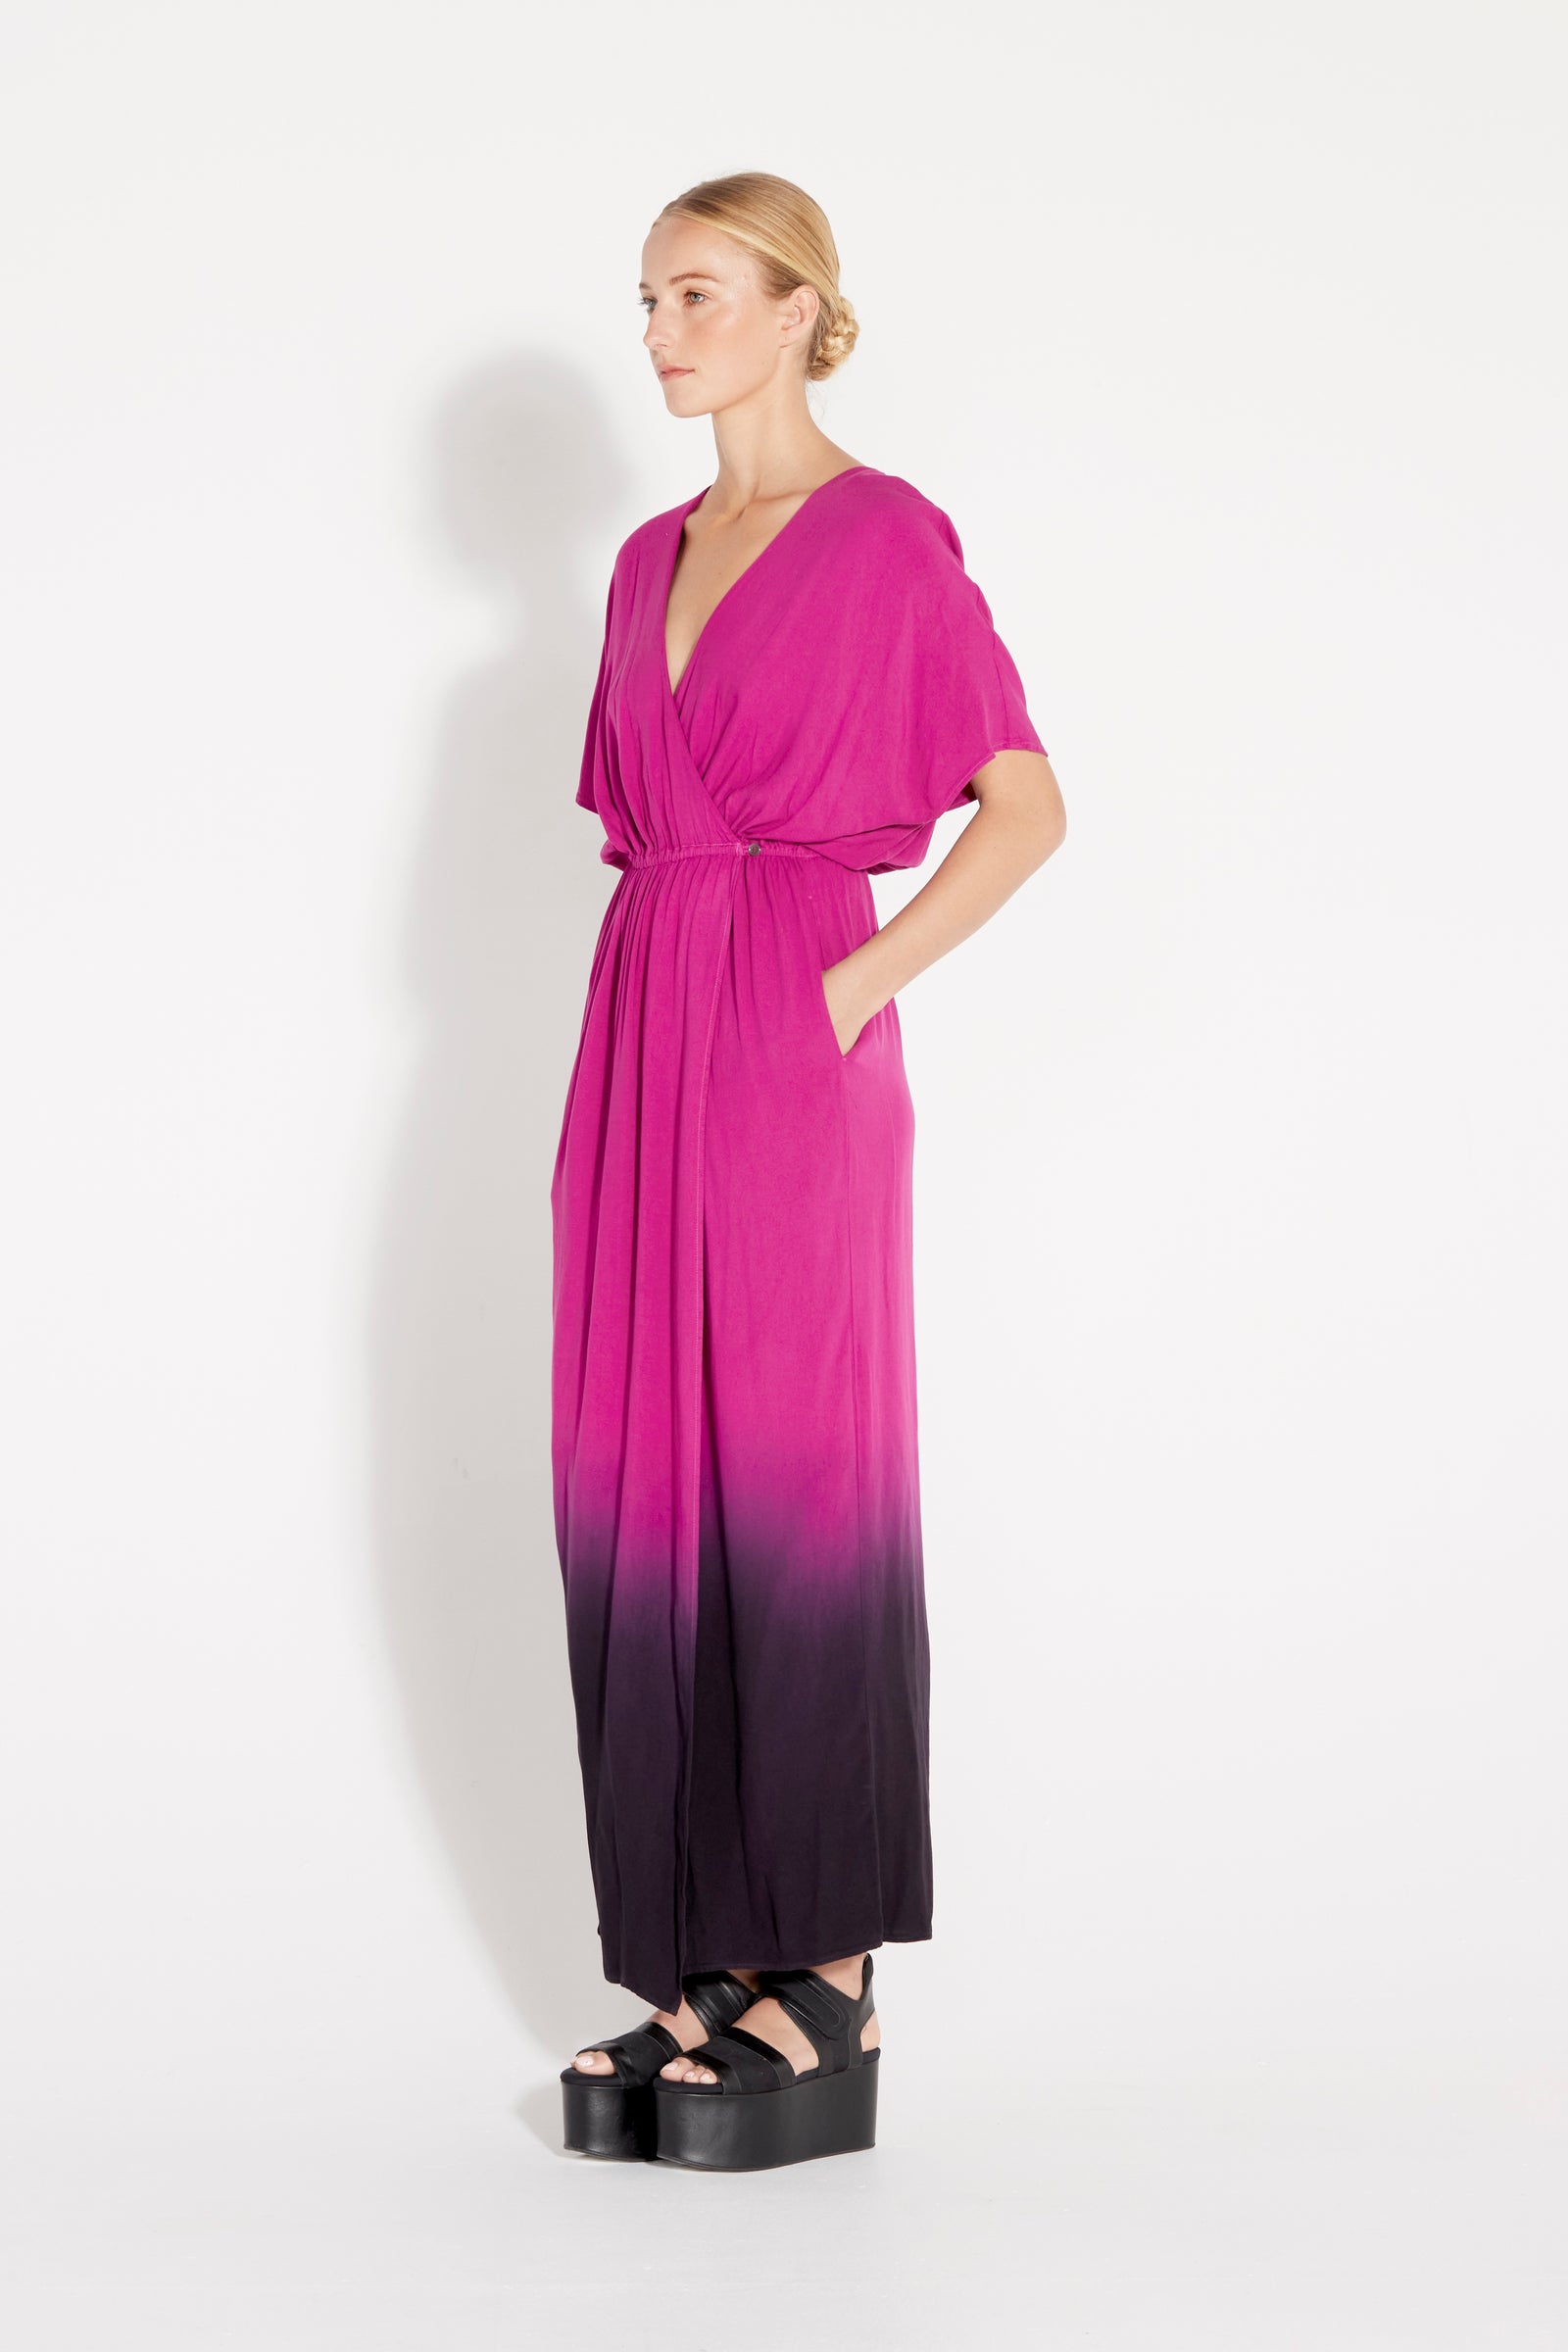 Dahlia Dip Dye Viscose Diane Dress Full Side View